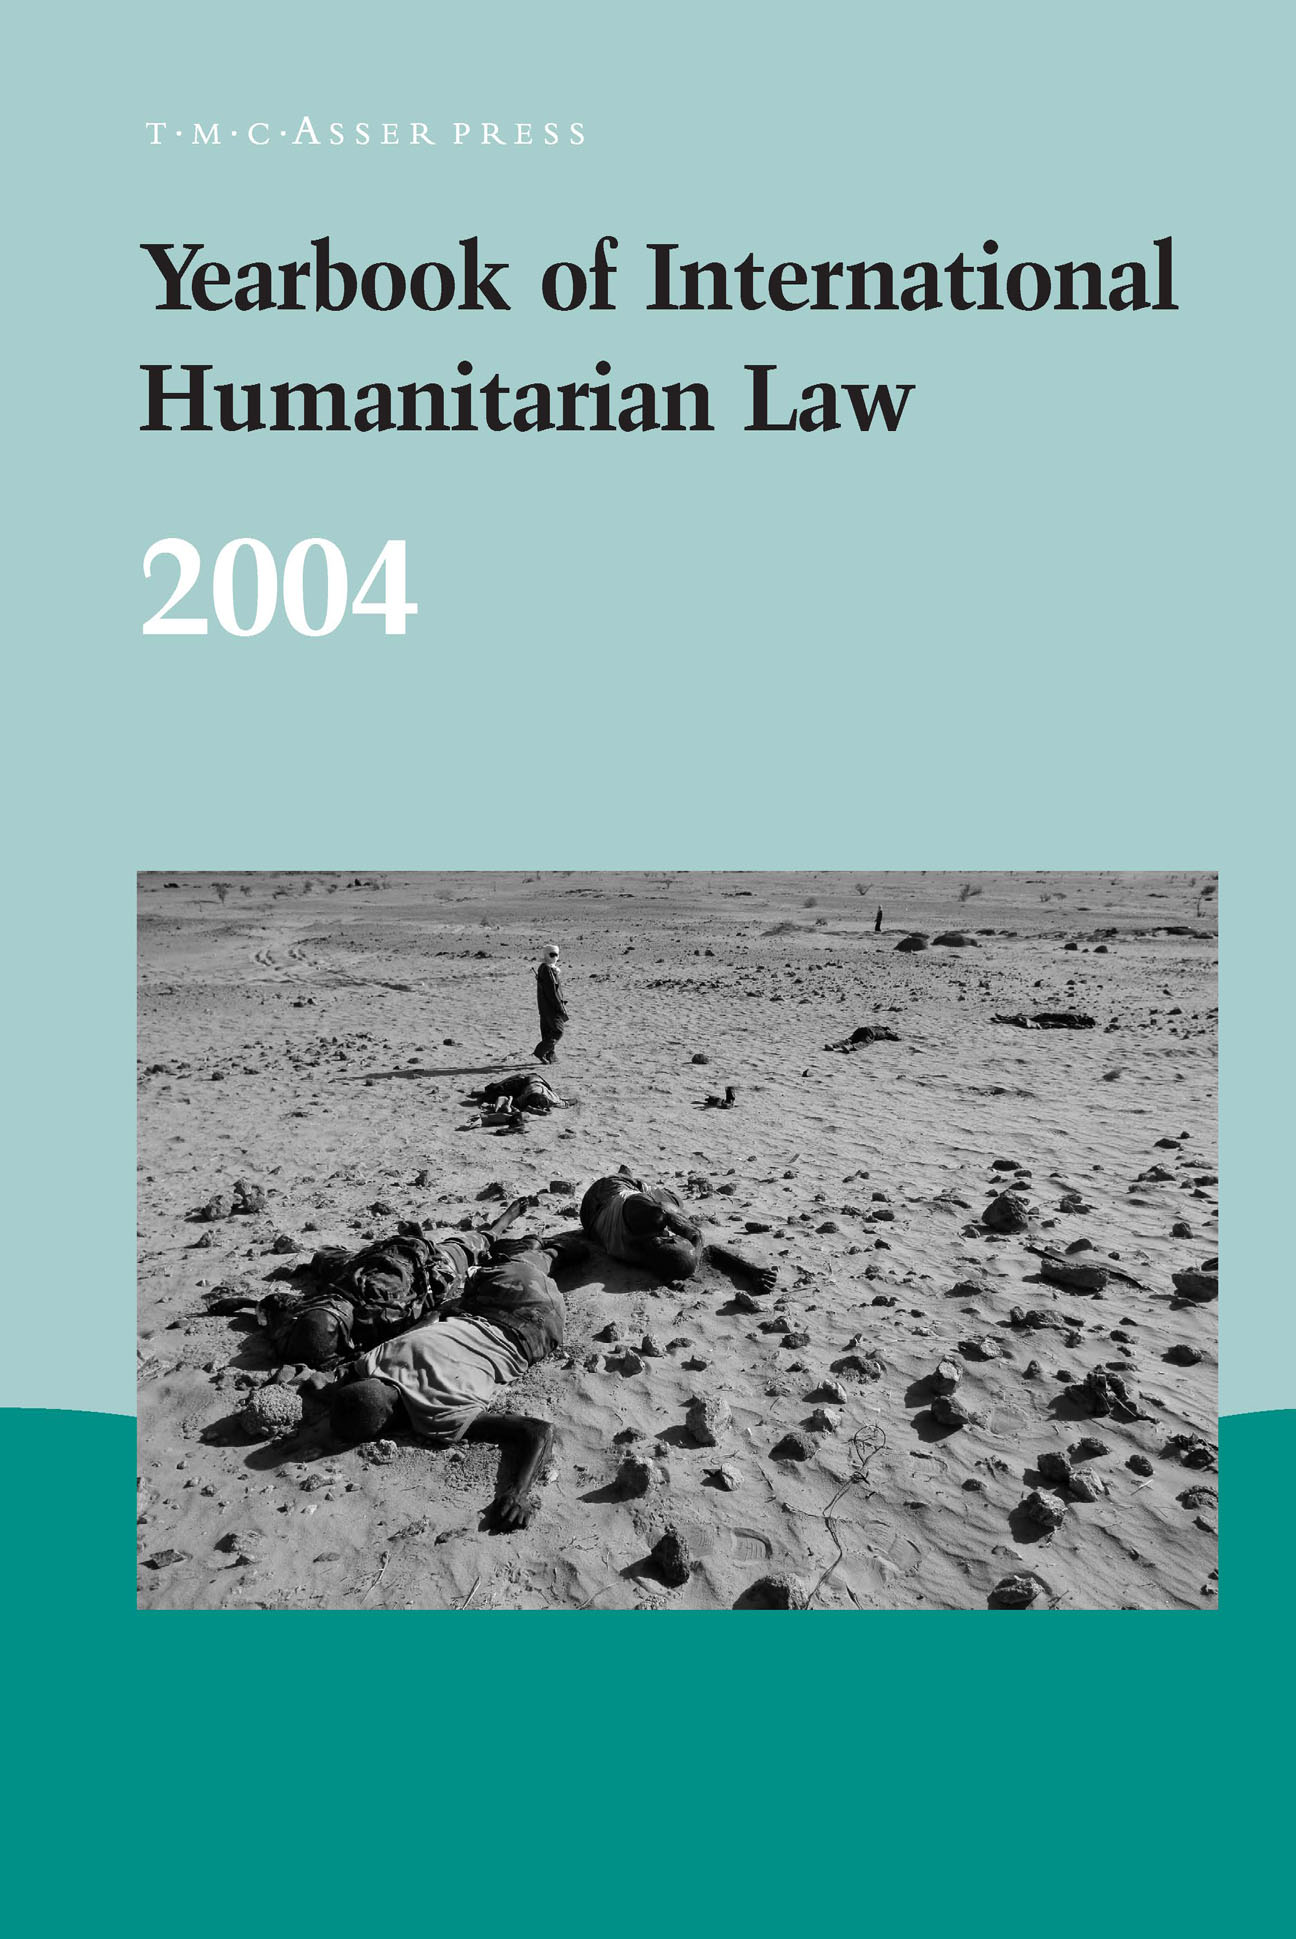 Yearbook of International Humanitarian Law – Volume 7, 2004